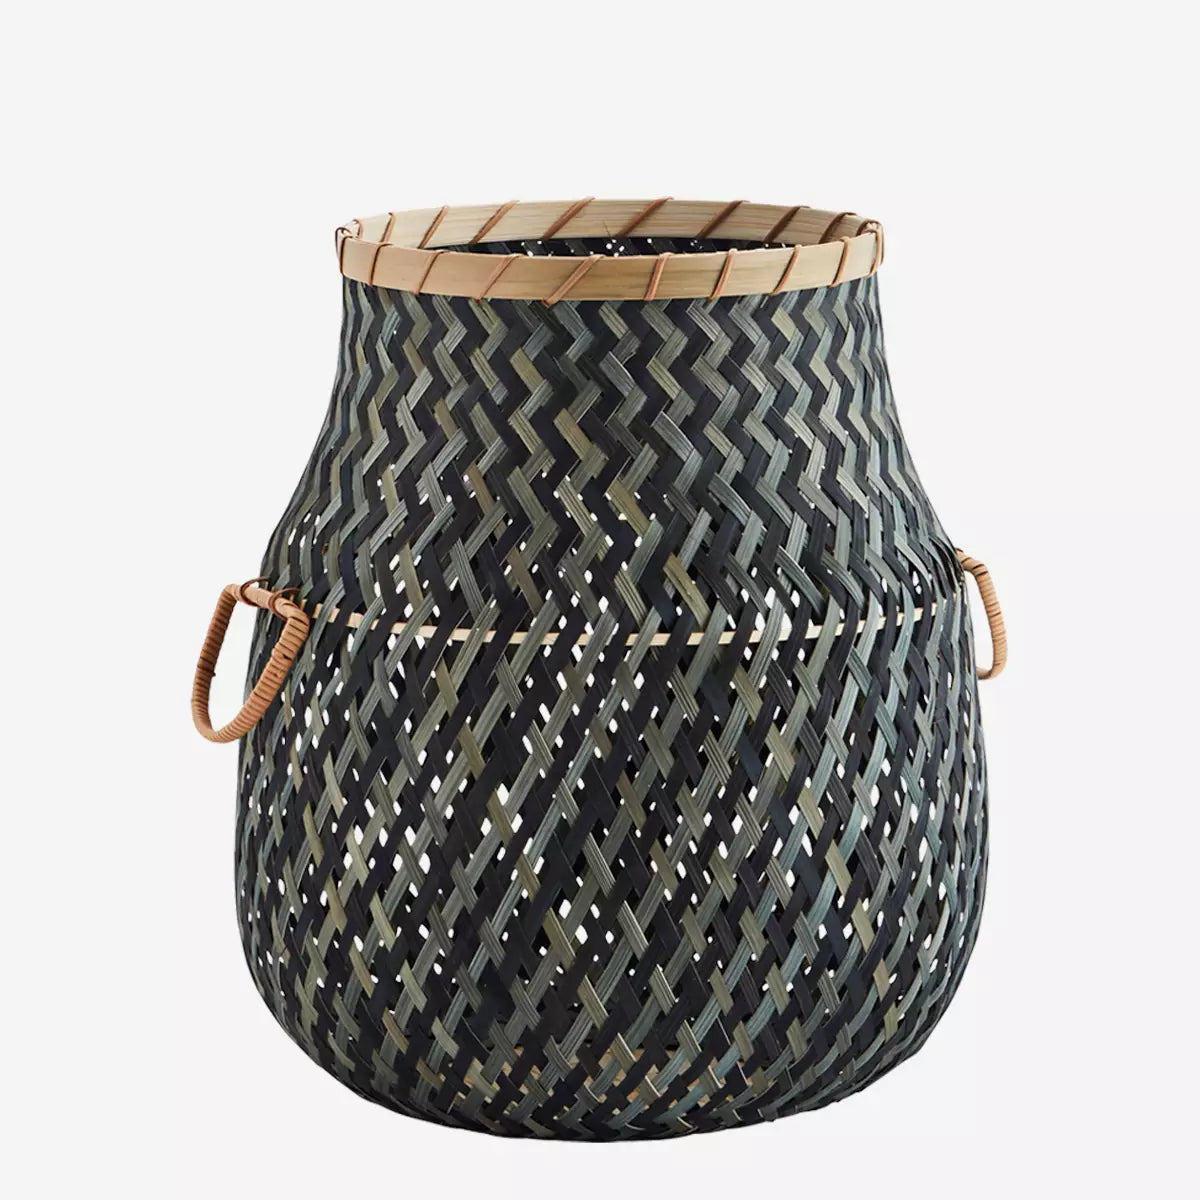 Bamboo Basket With Handless Black, Natural